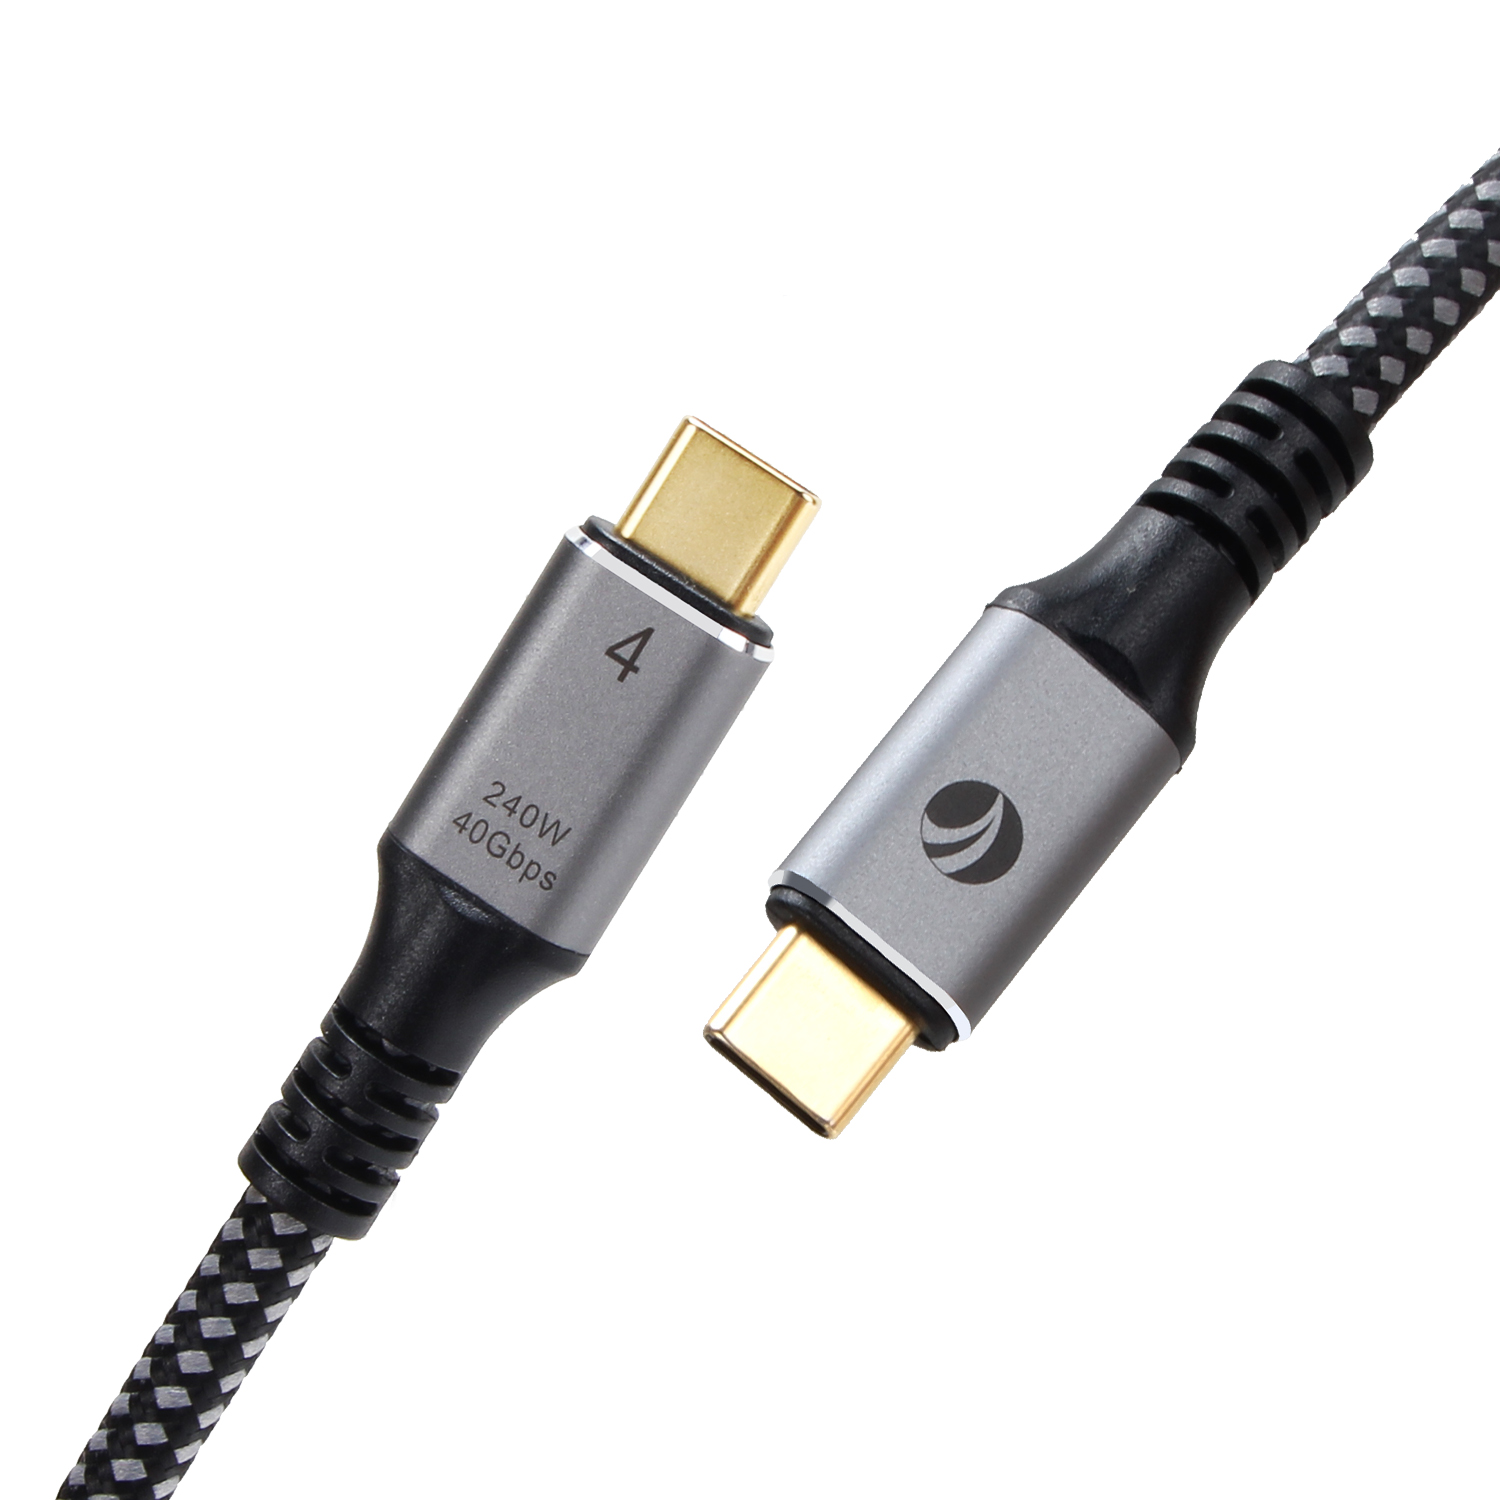 1.2m USB4 Charging Cable CU541M